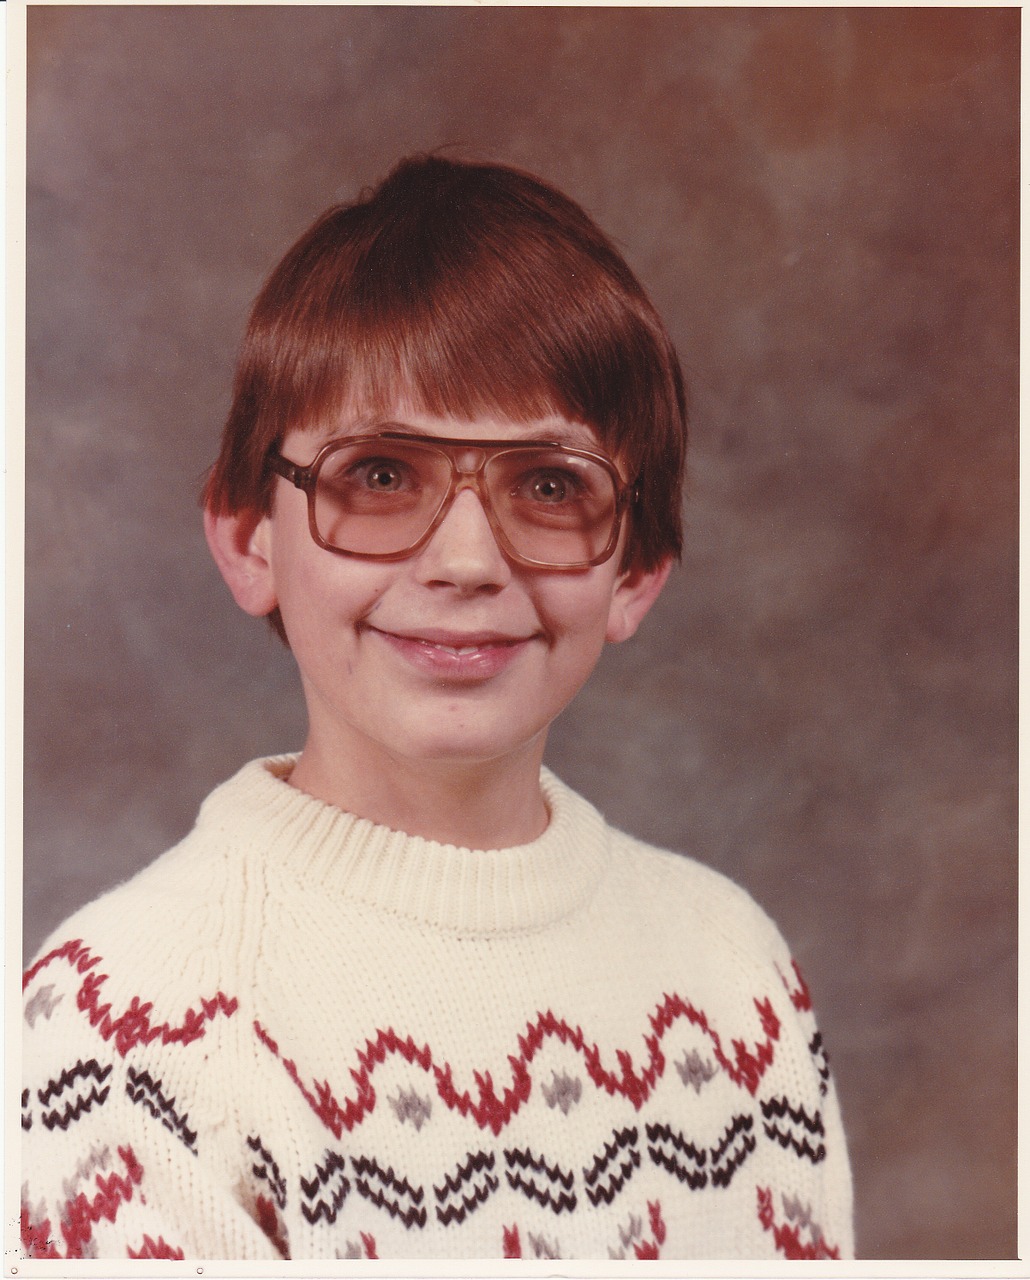 school boy nerd spectacles free photo